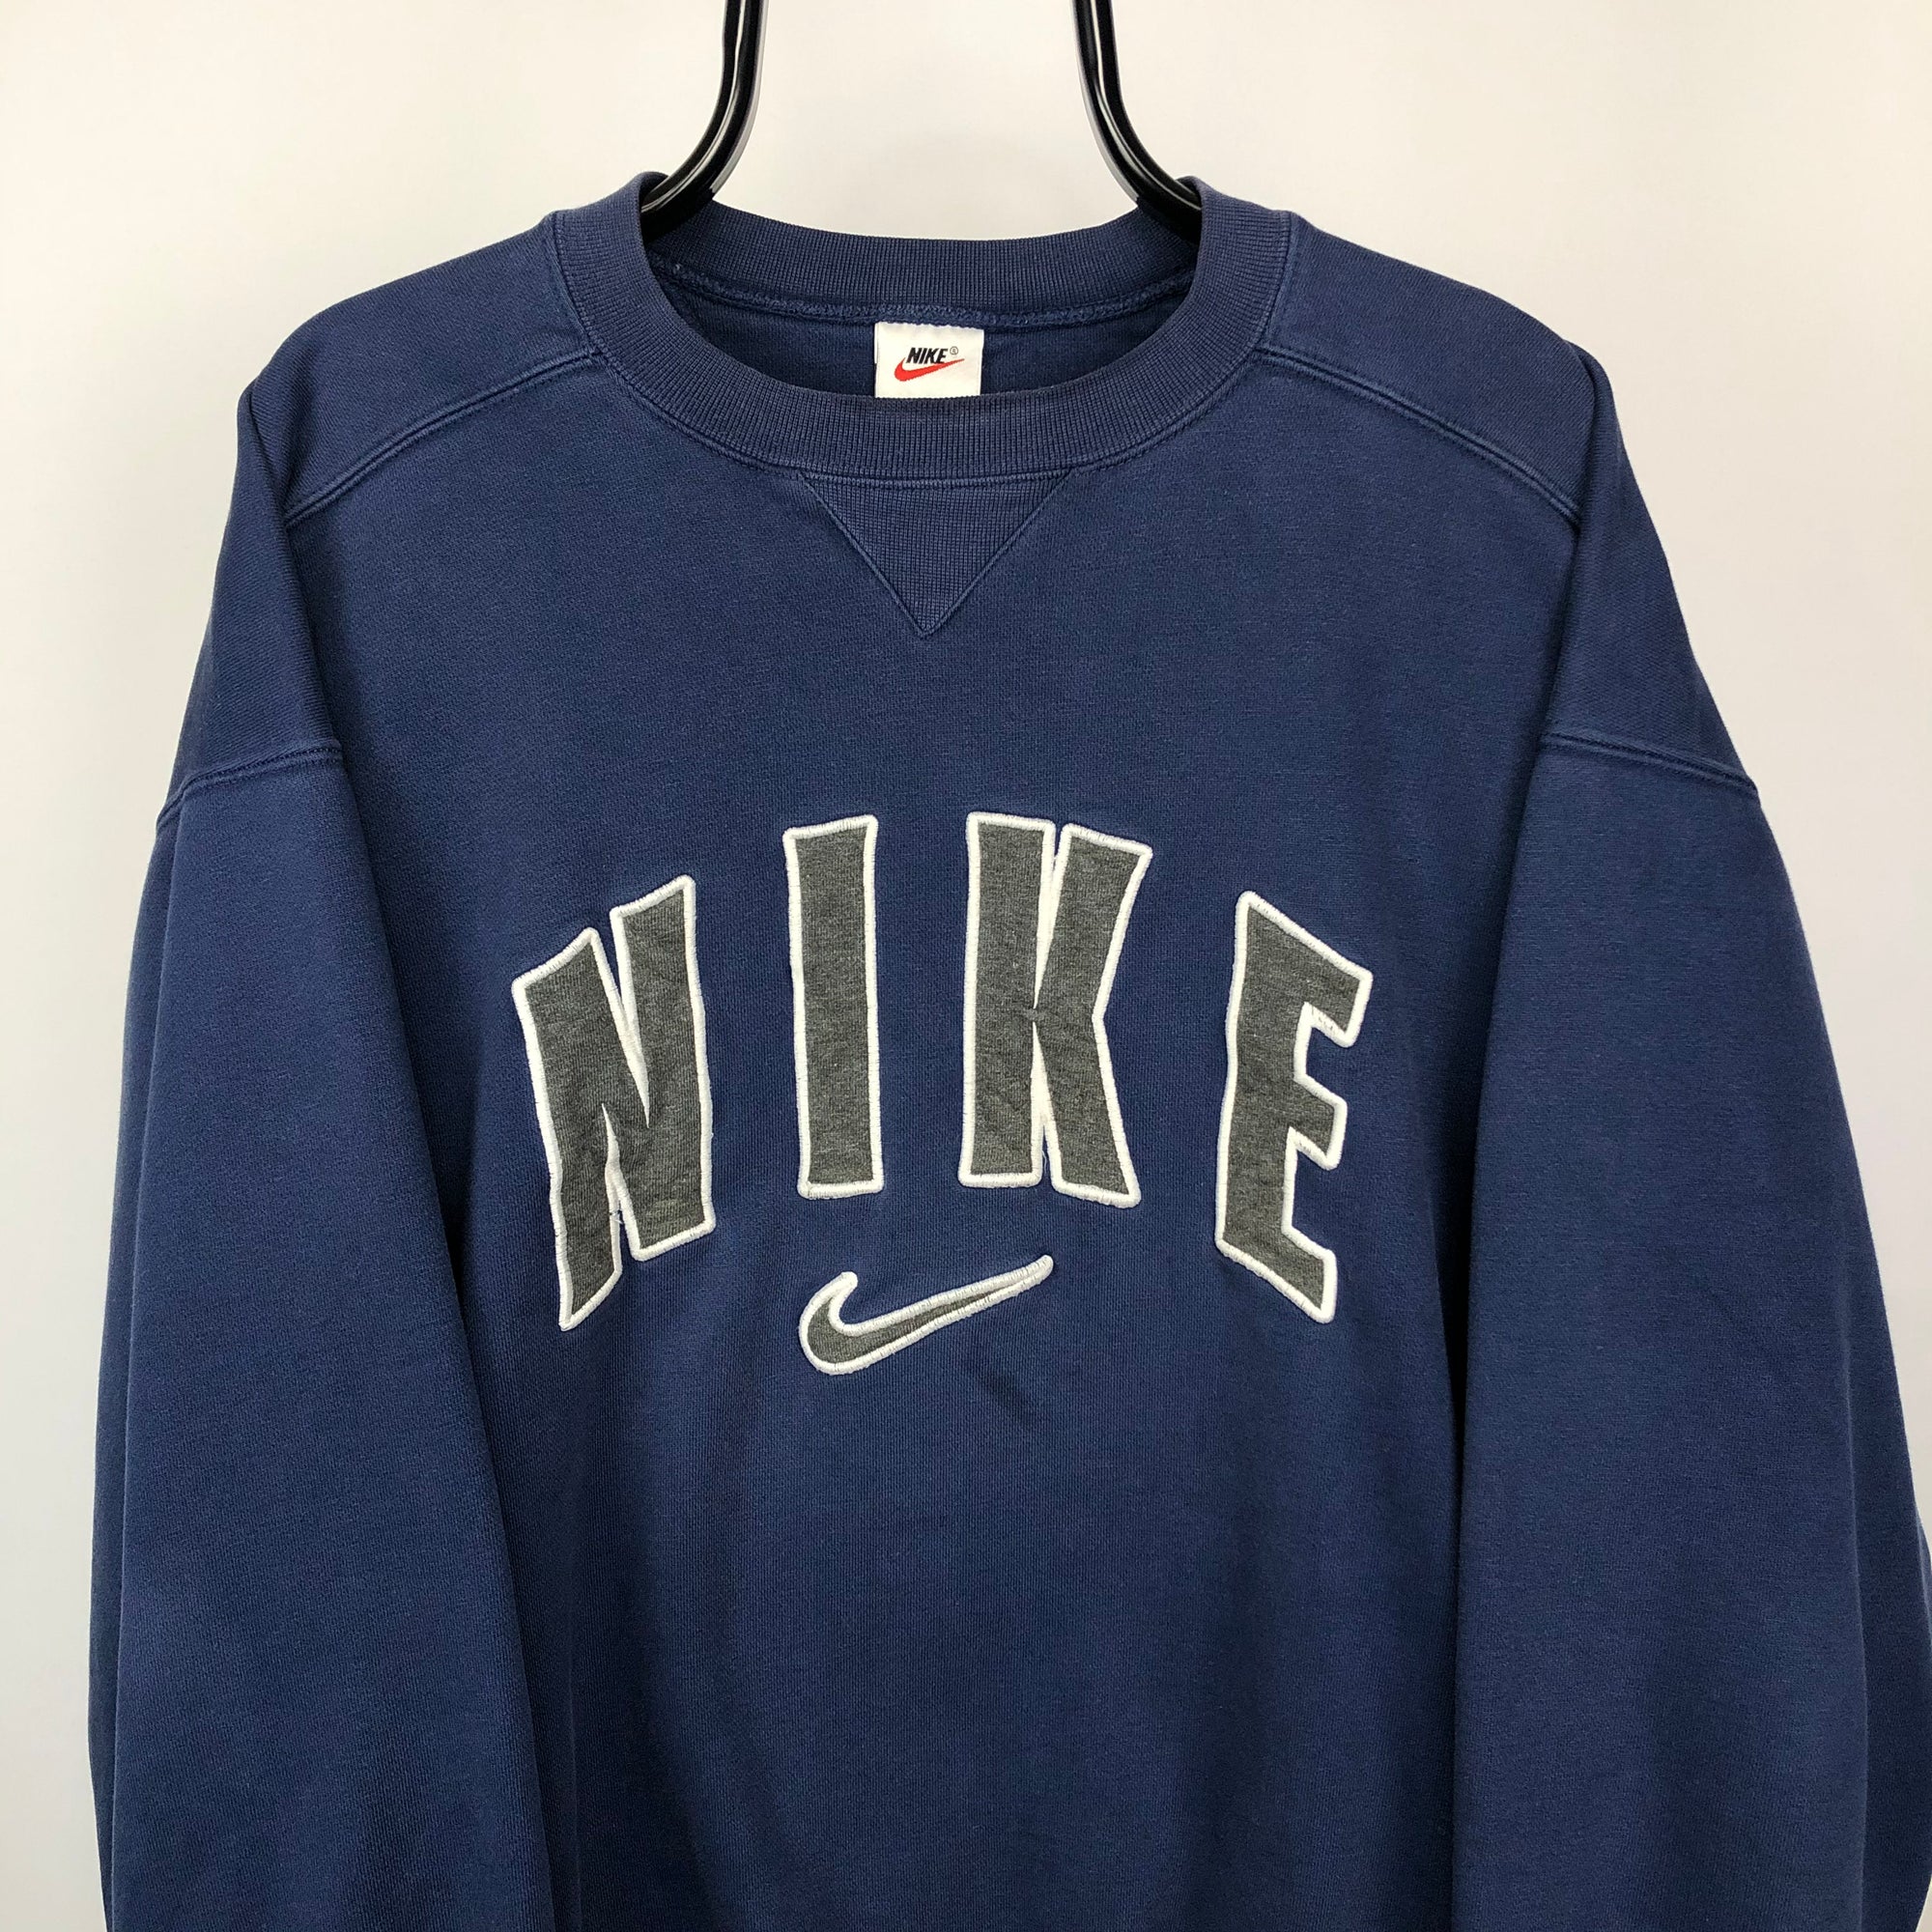 Vintage 90s Nike Spellout Sweatshirt in Navy - Men's Large/Women's XL